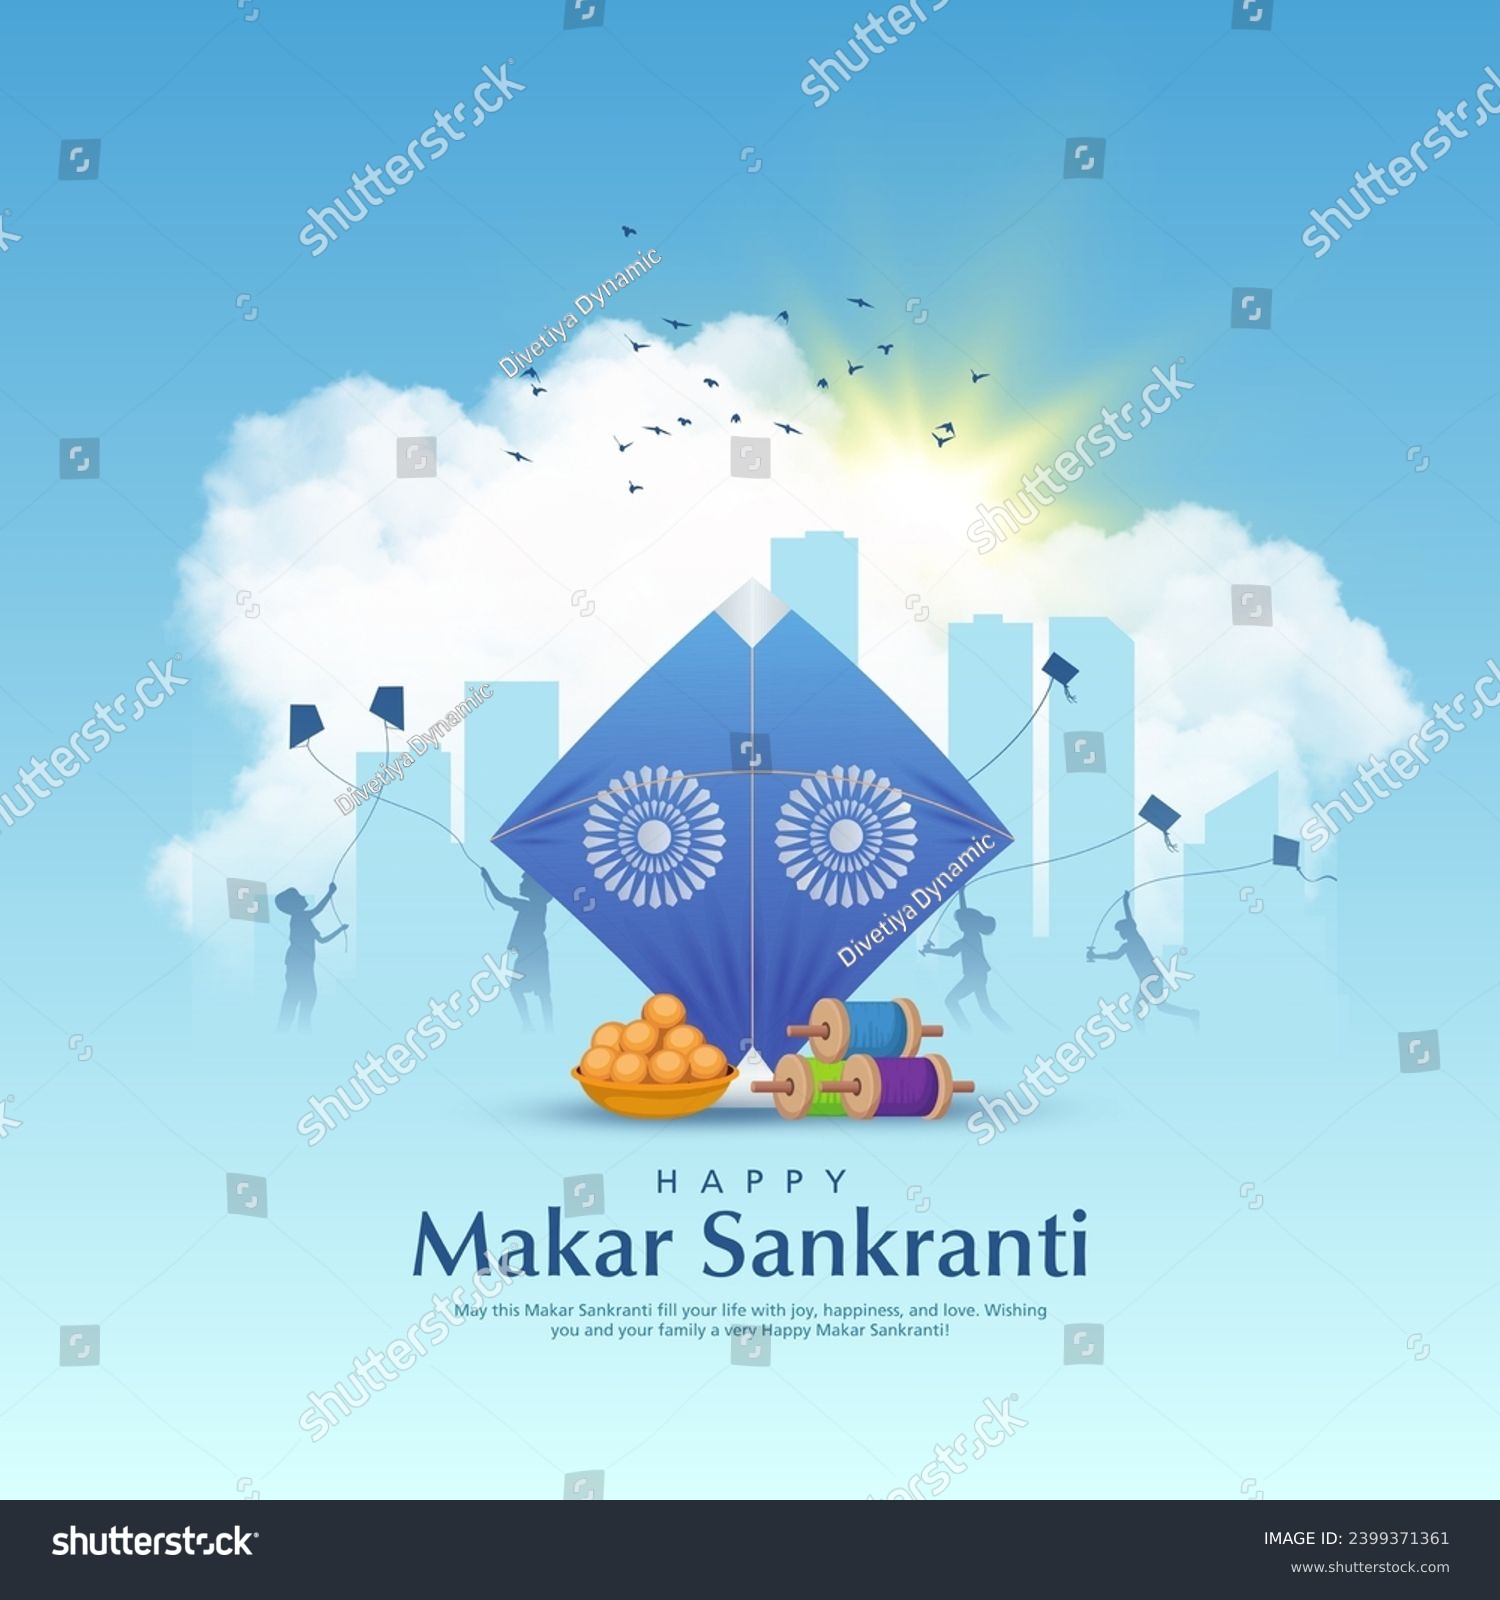 SVG of Creative vector illustration of Happy Makar Sankranti holiday India festival svg